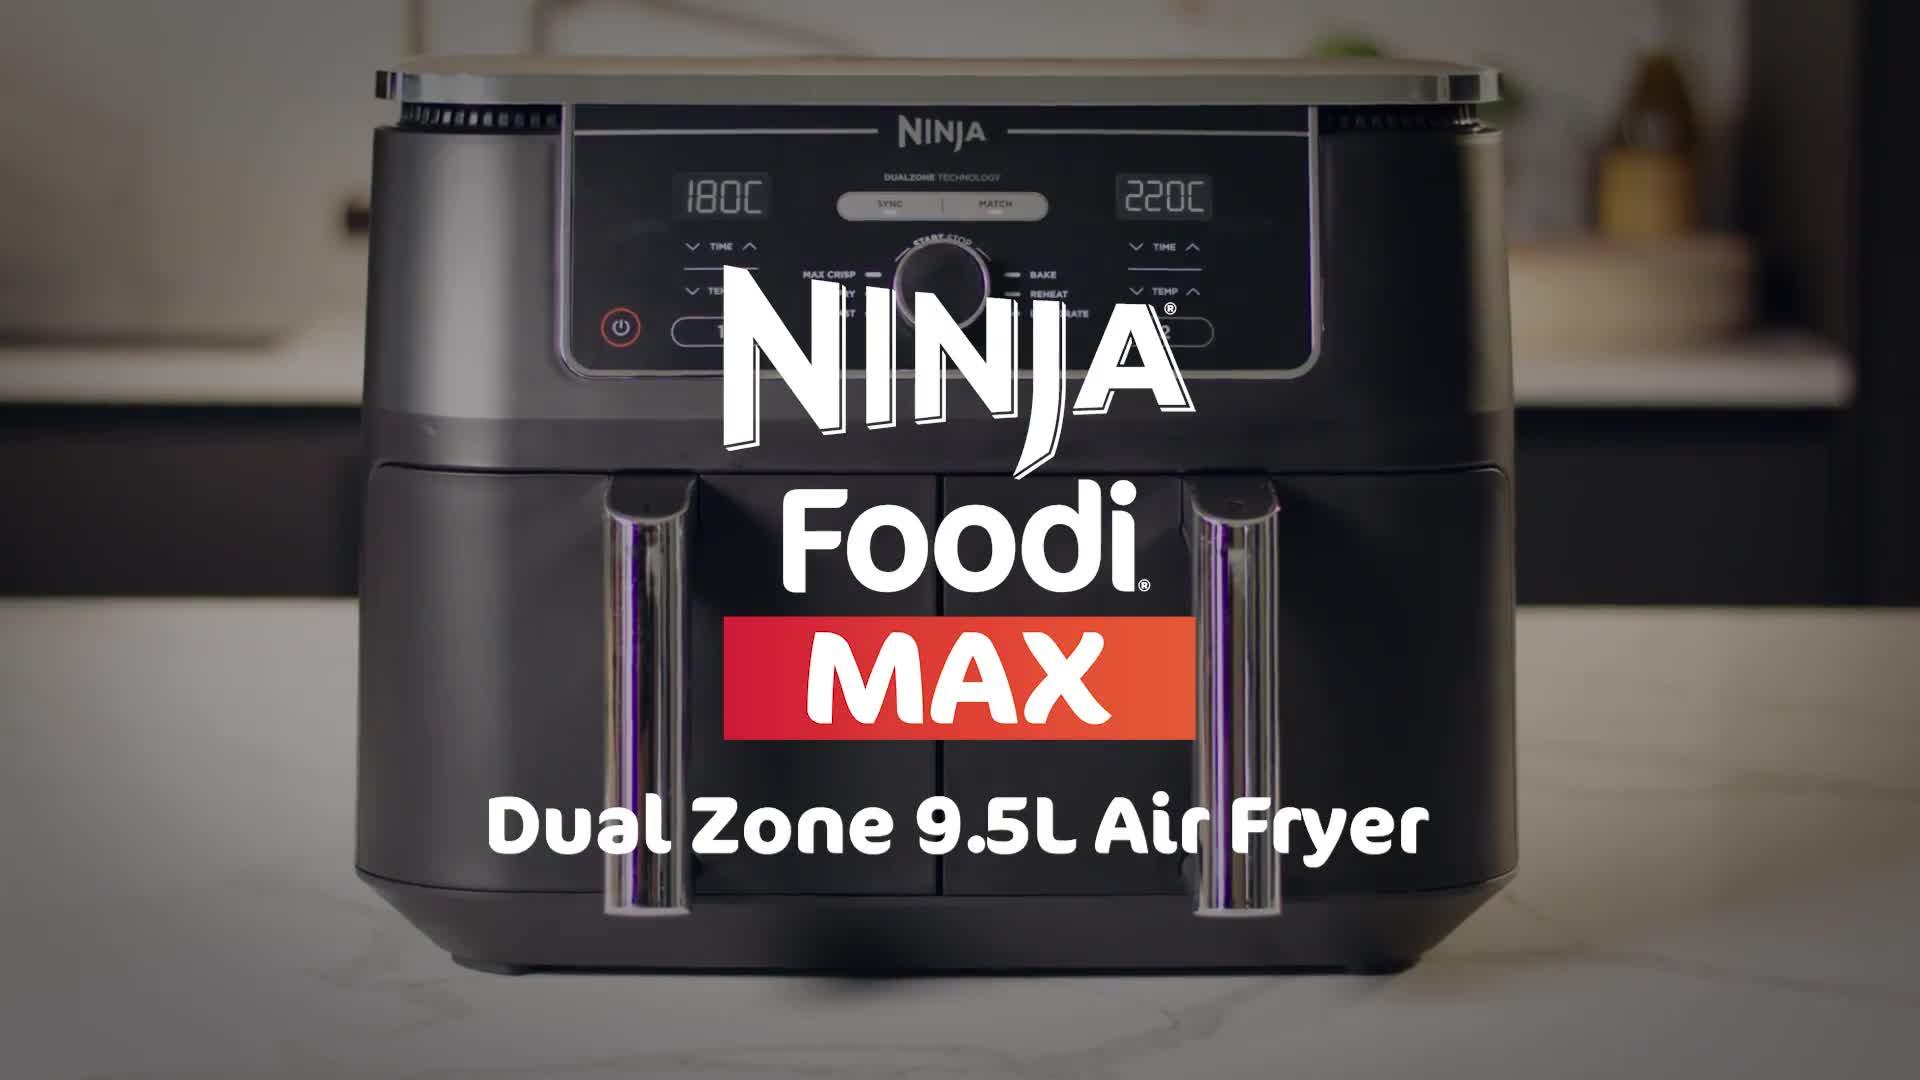 Ninja AF400UK Air Fryer - Foodi MAX Dual Zone stock finder alerts in the UK